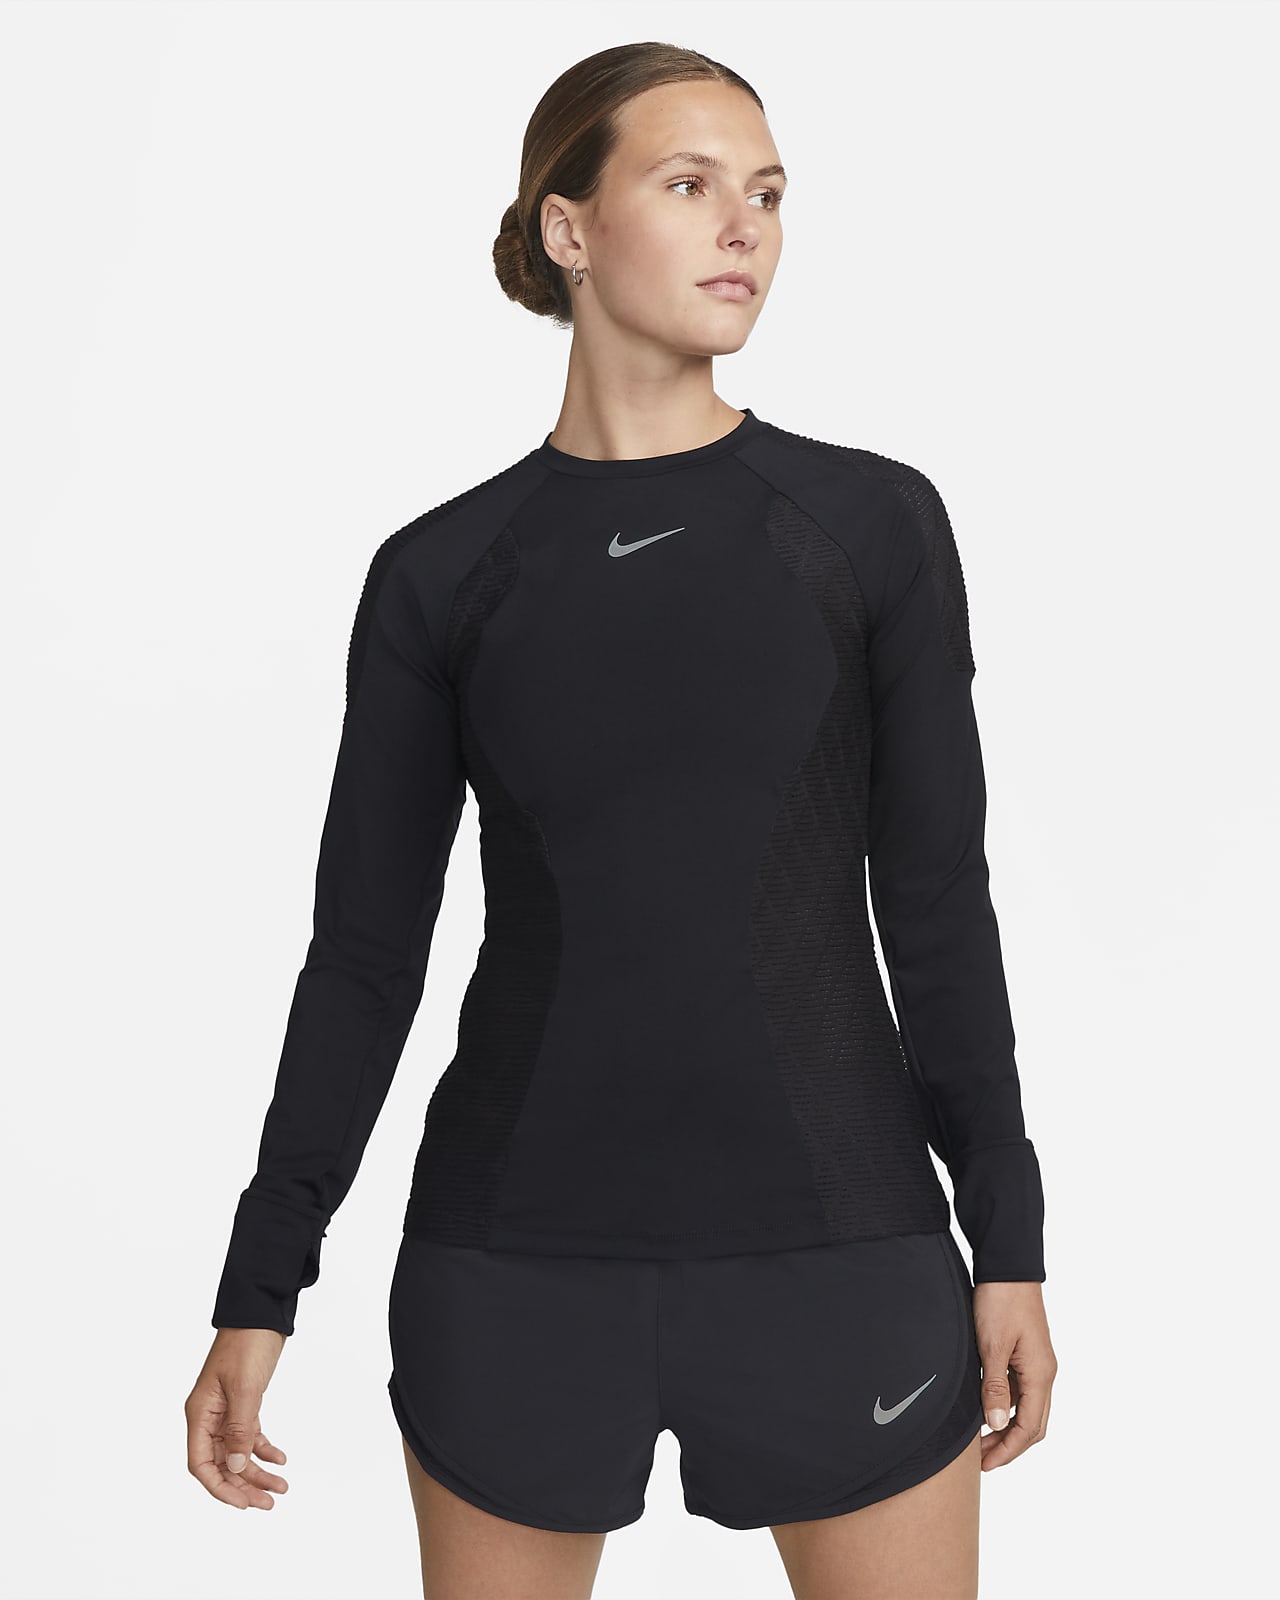 tøj Deqenereret Hør efter Nike Dri-FIT ADV Run Division Women's Long-Sleeve Running Top. Nike LU